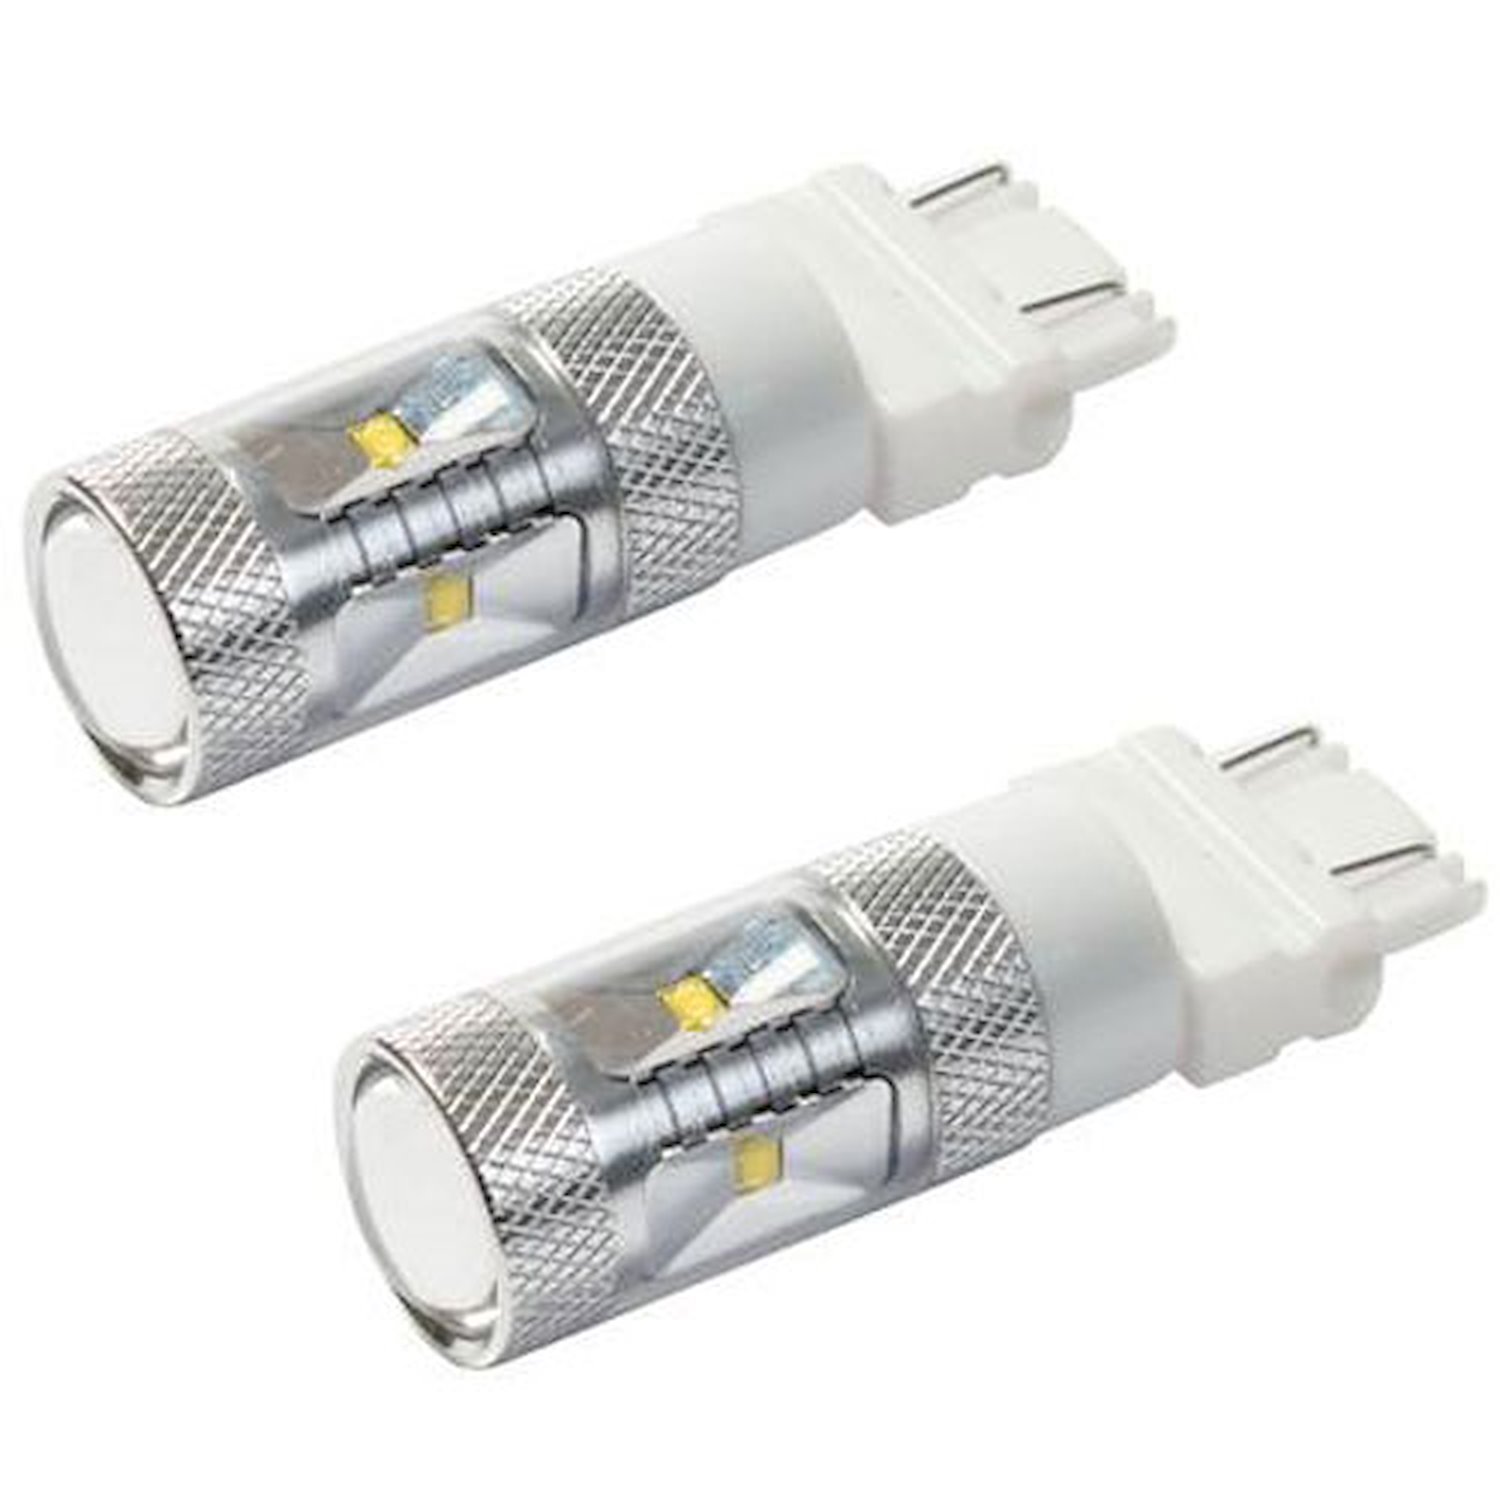 Plasma LED Bulbs 7443 Bulb Replacements